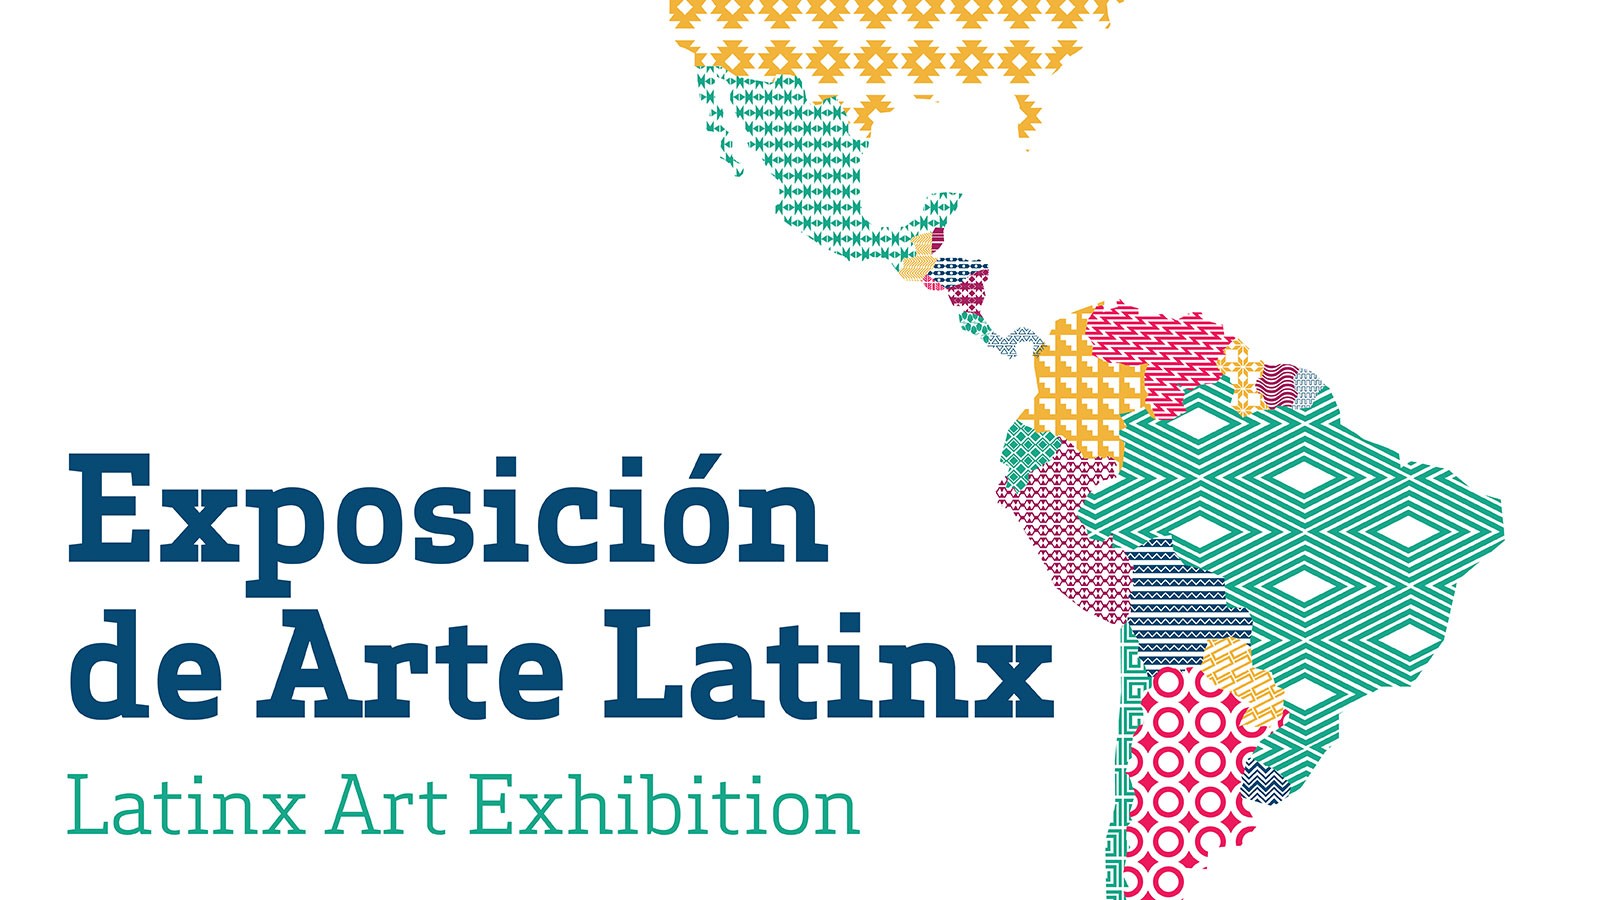 Exposicion de arte latinx